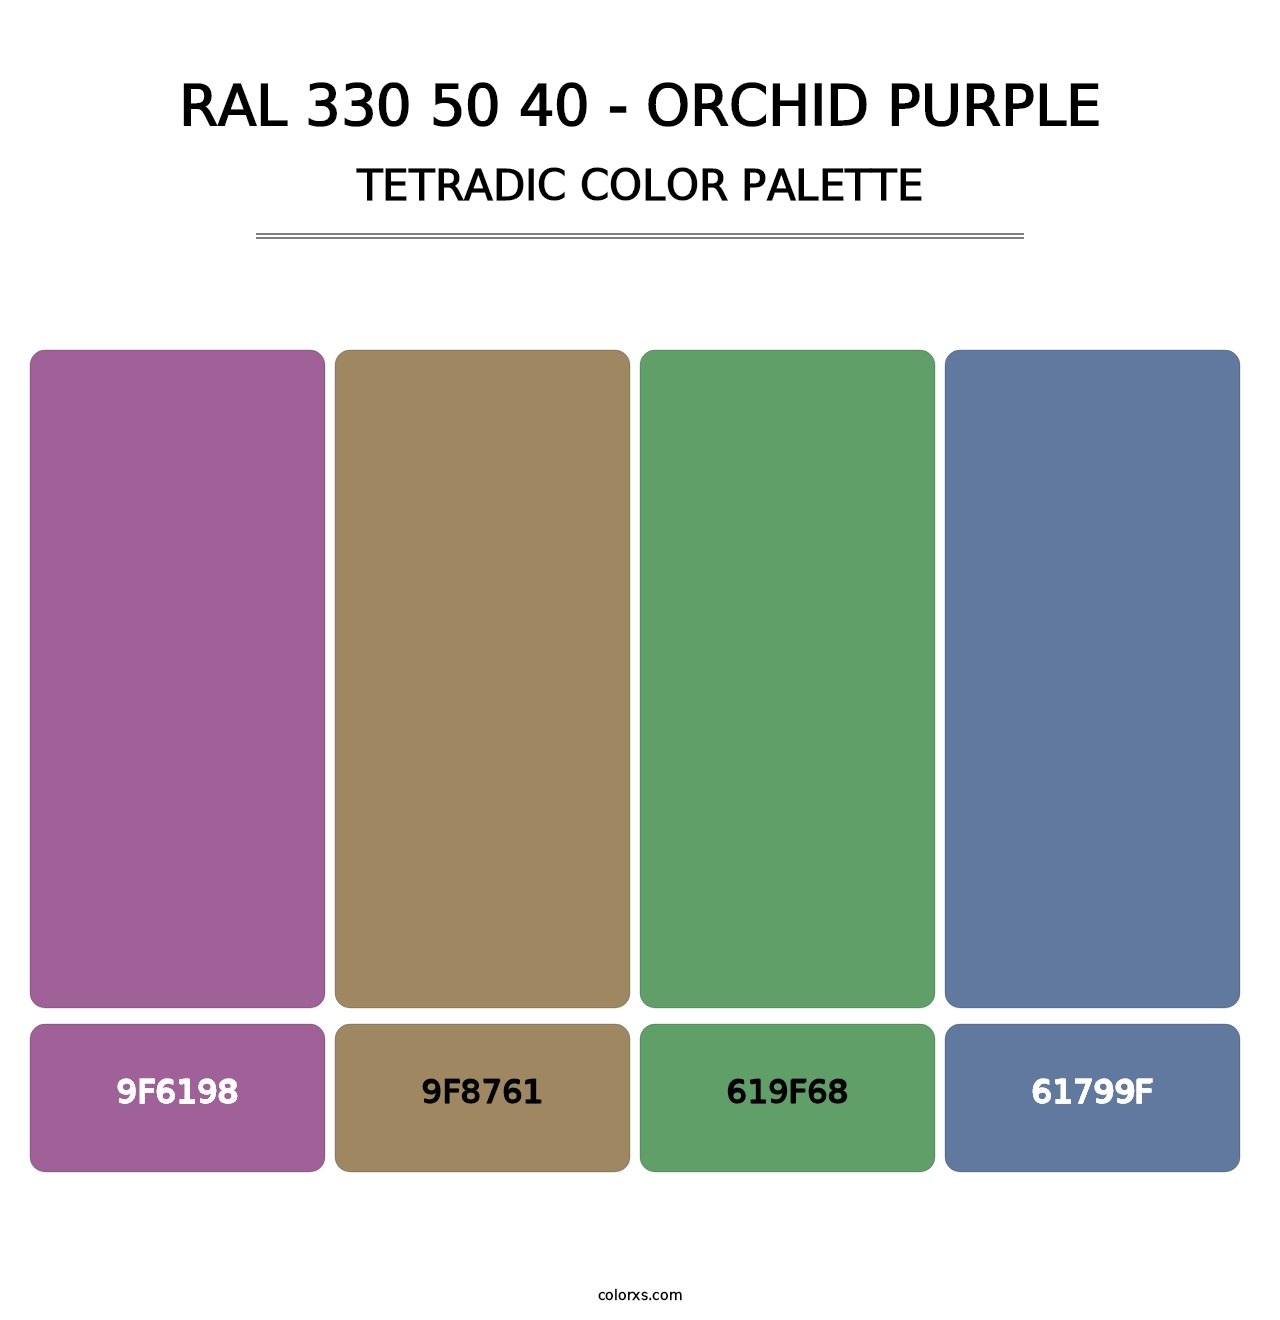 RAL 330 50 40 - Orchid Purple - Tetradic Color Palette